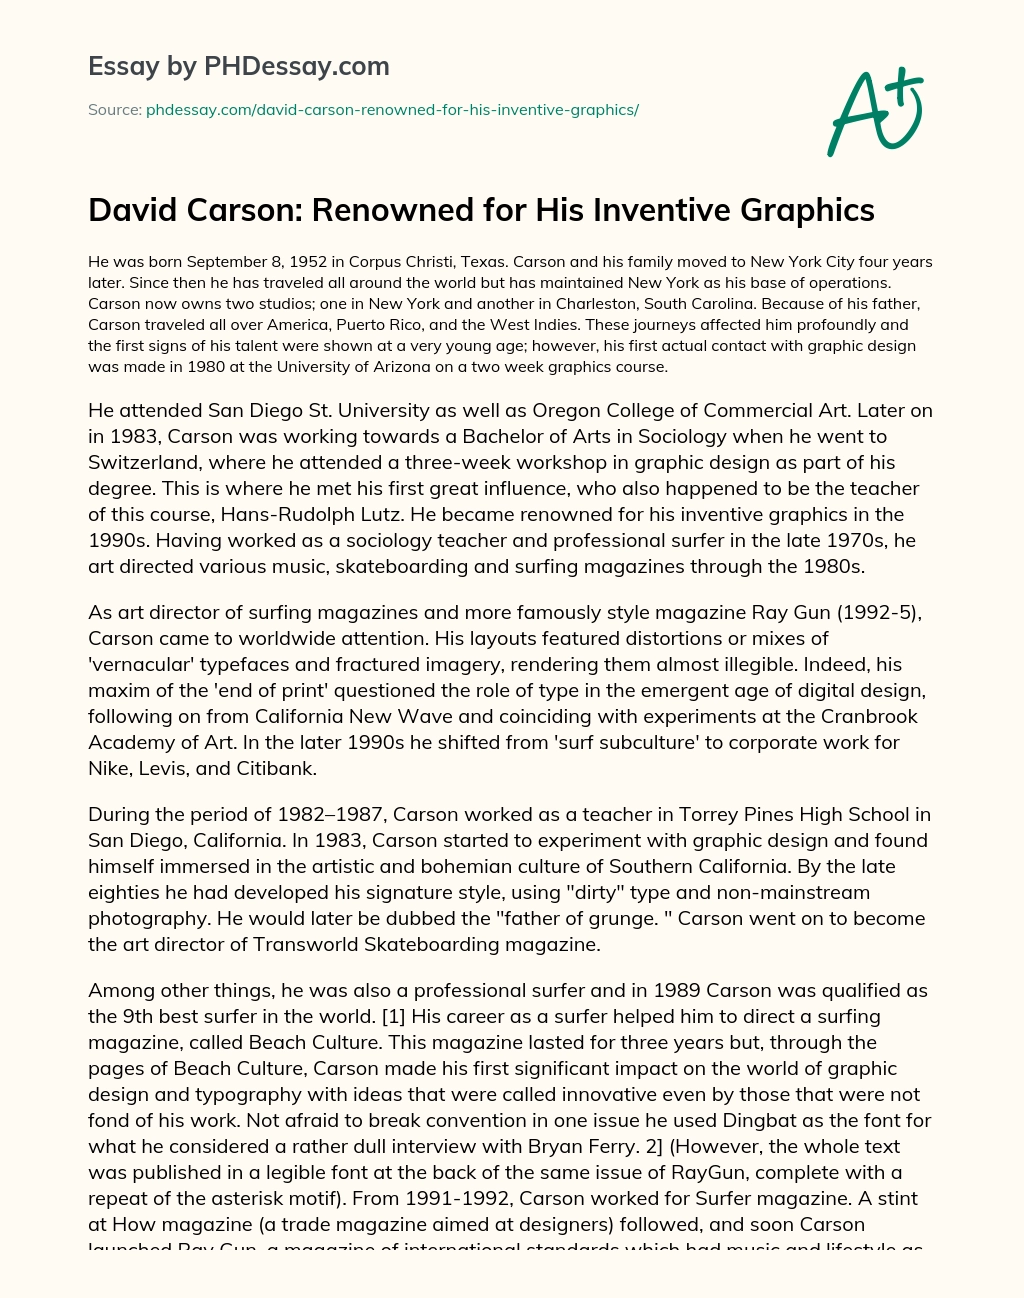 David Carson: Renowned for His Inventive Graphics essay